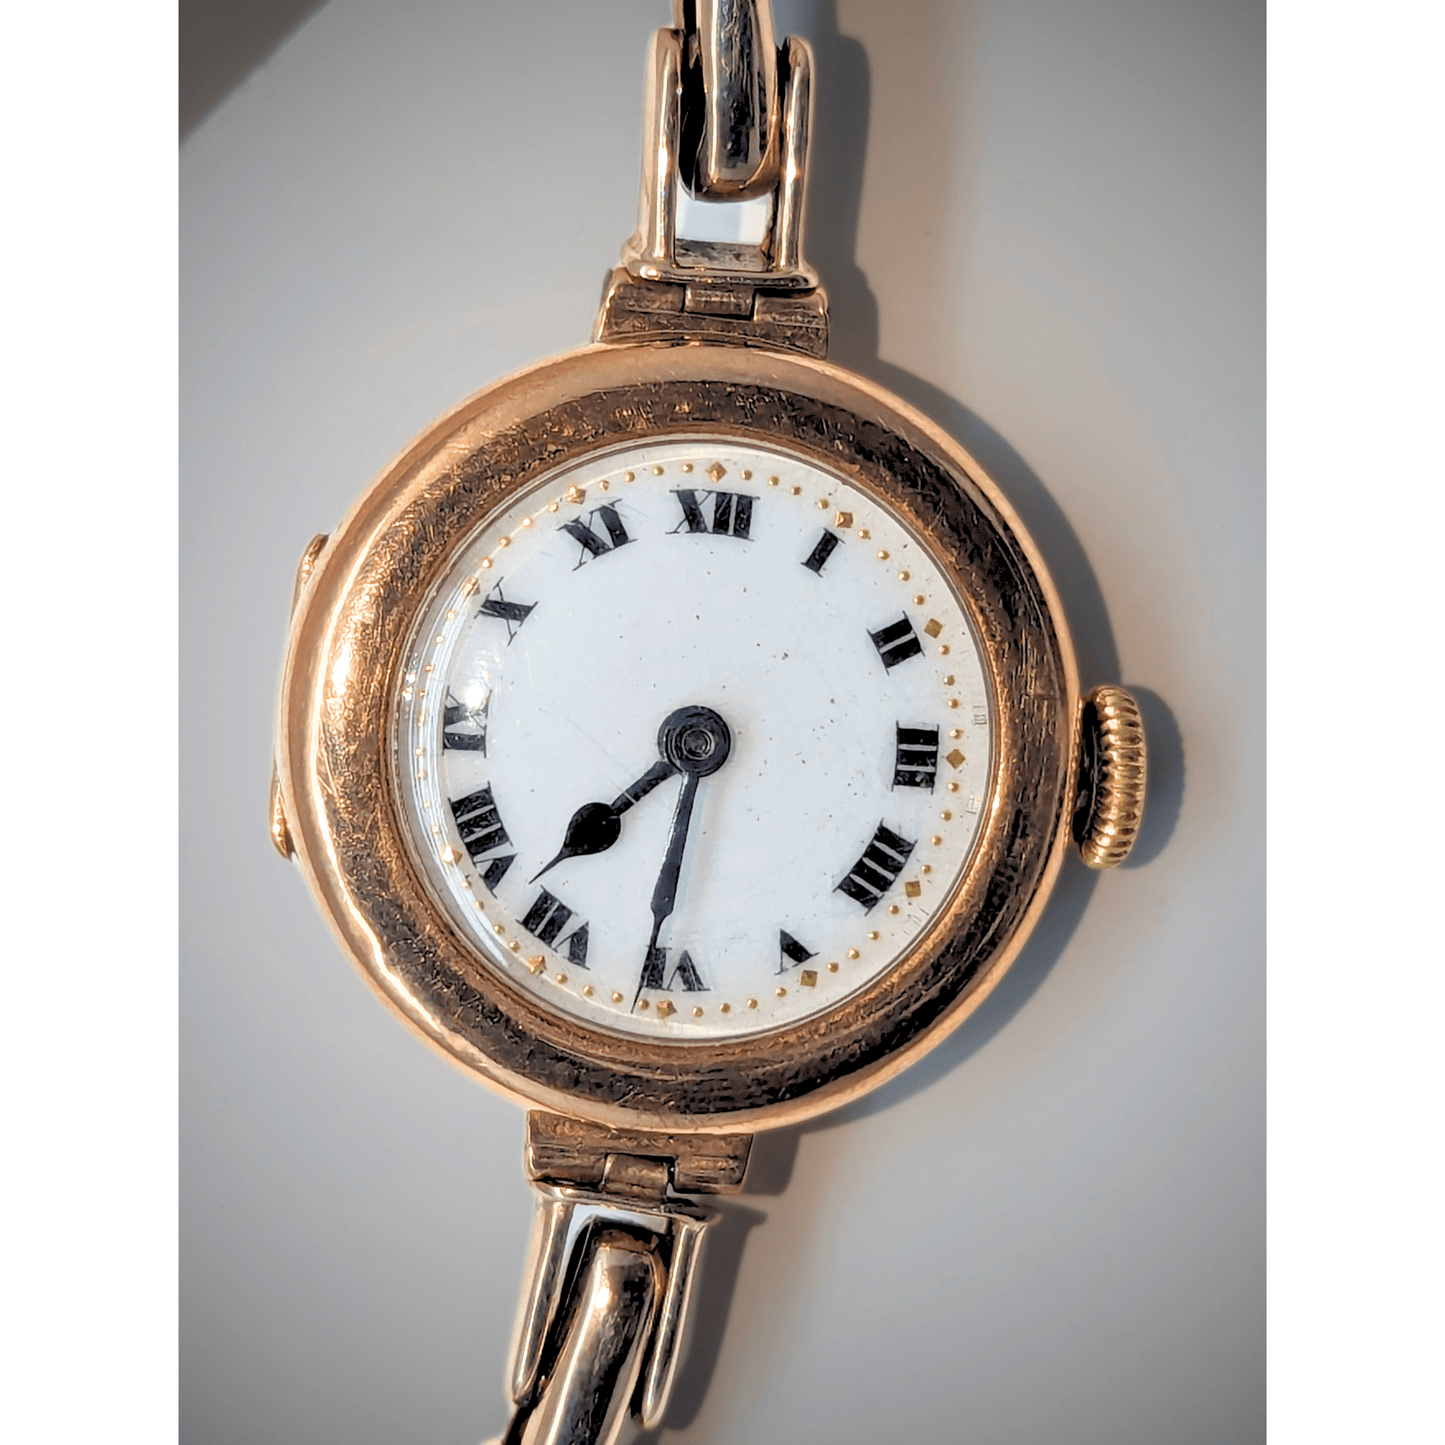 Vintage 9K Gold Swiss Watch Face